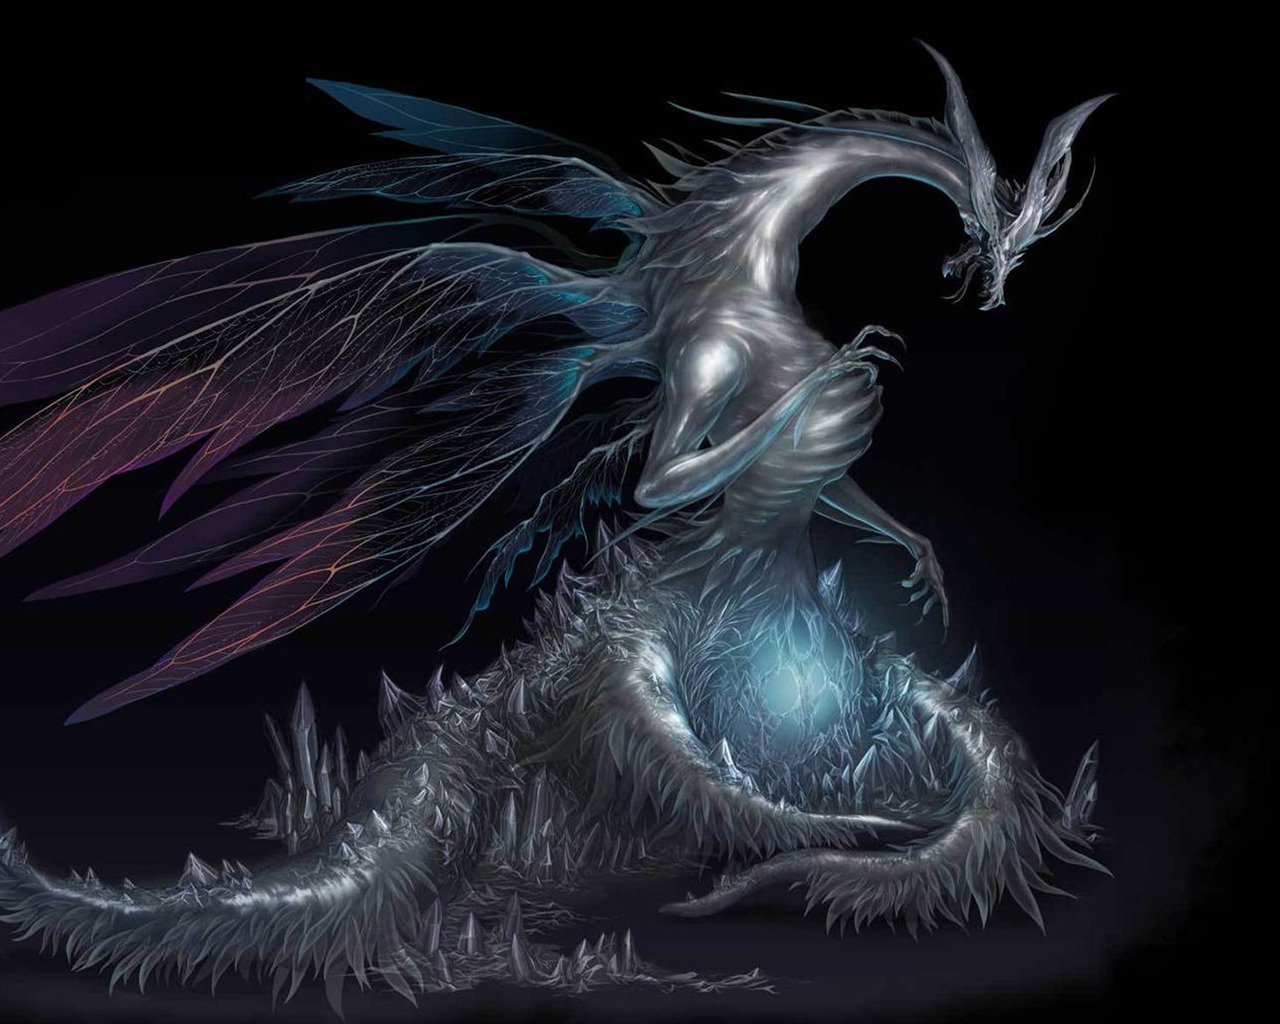 Dark Souls Dragon for 1280 x 1024 resolution